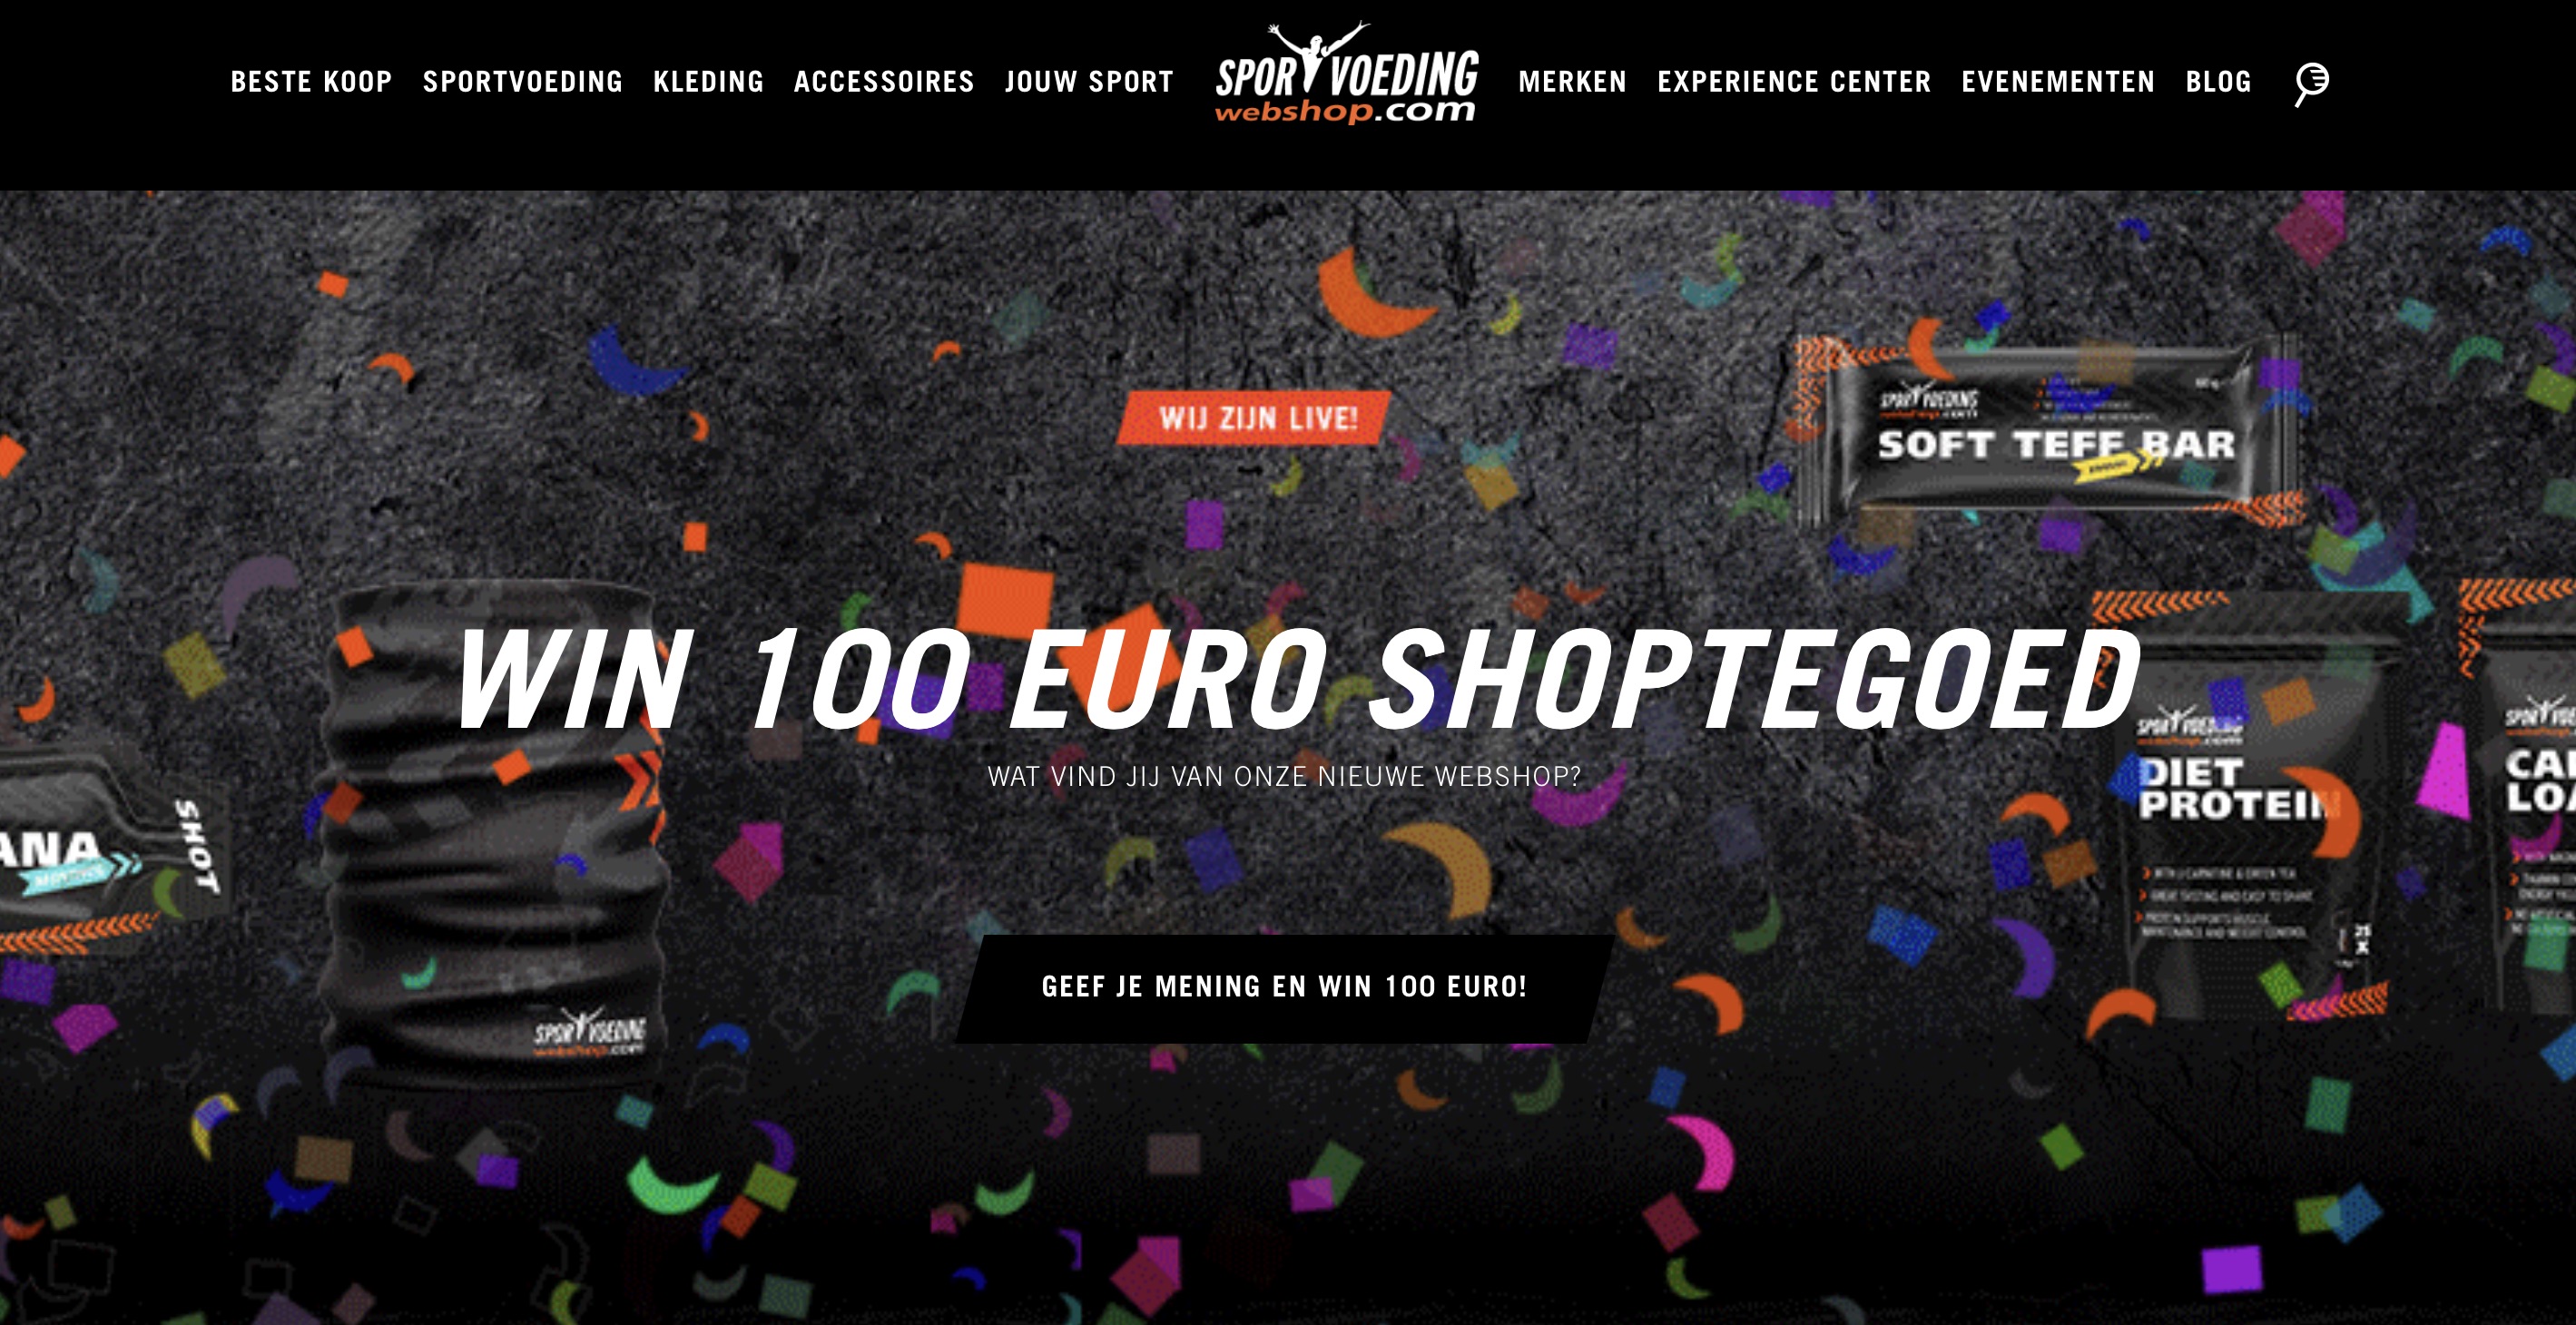 Marktleider SportvoedingWebshop lanceert website. Win euro | SportvoedingWebshop